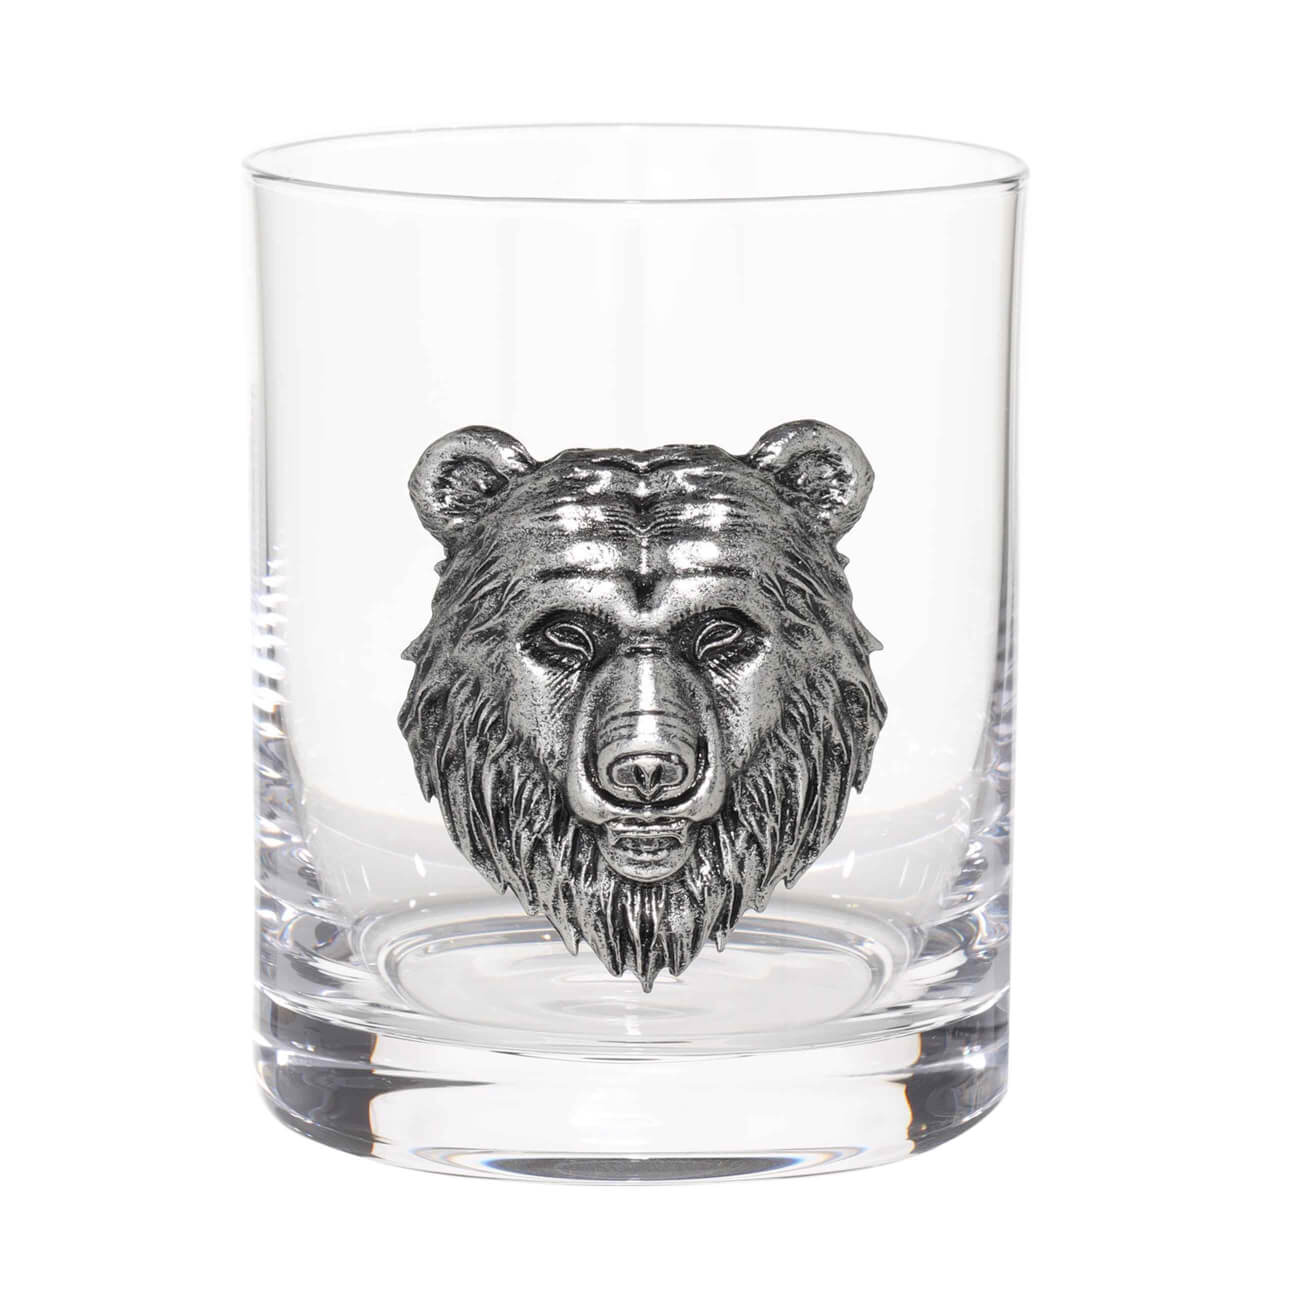 Стакан для виски, 340 мл, стекло/металл, серебристый, Медведь, Lux elements лиса и медведь